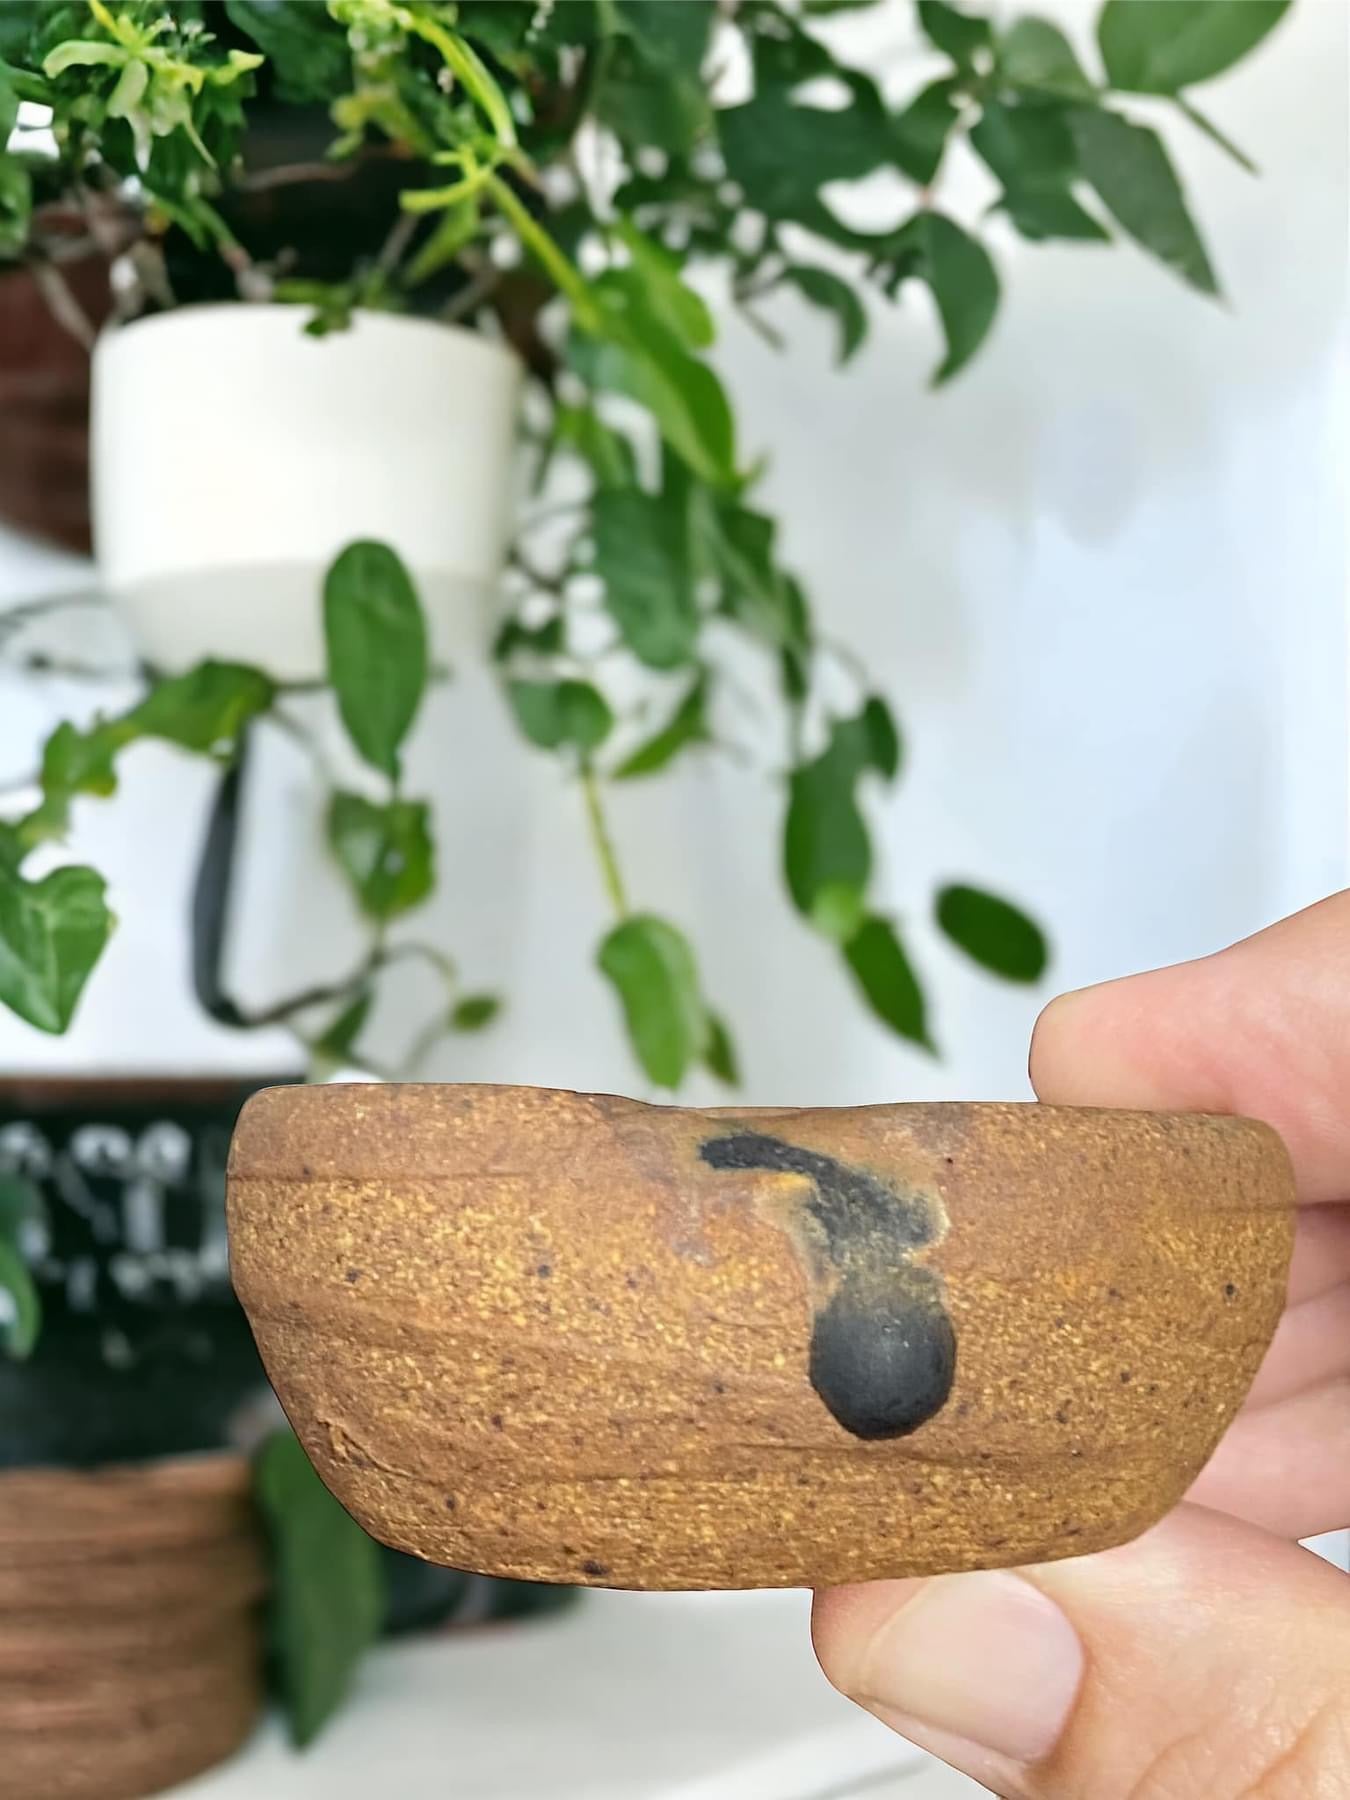 Shuho - Mame Round Bonsai Pot